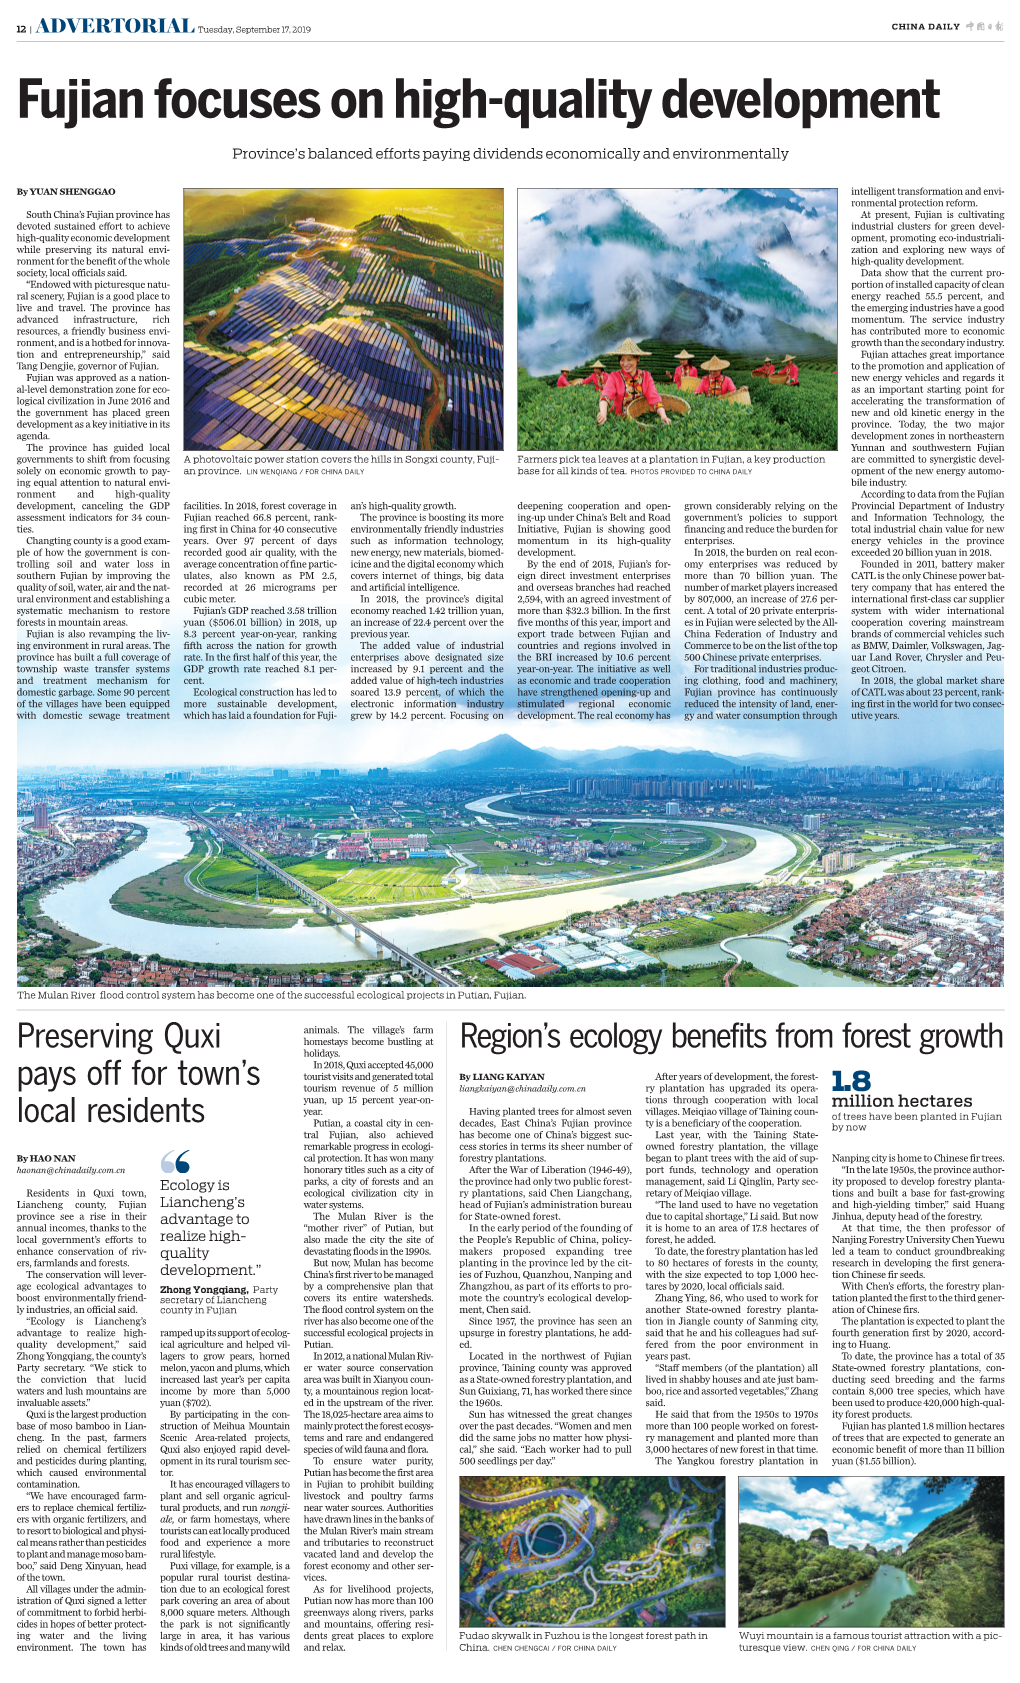 Fujian Focuses on Highquality Development